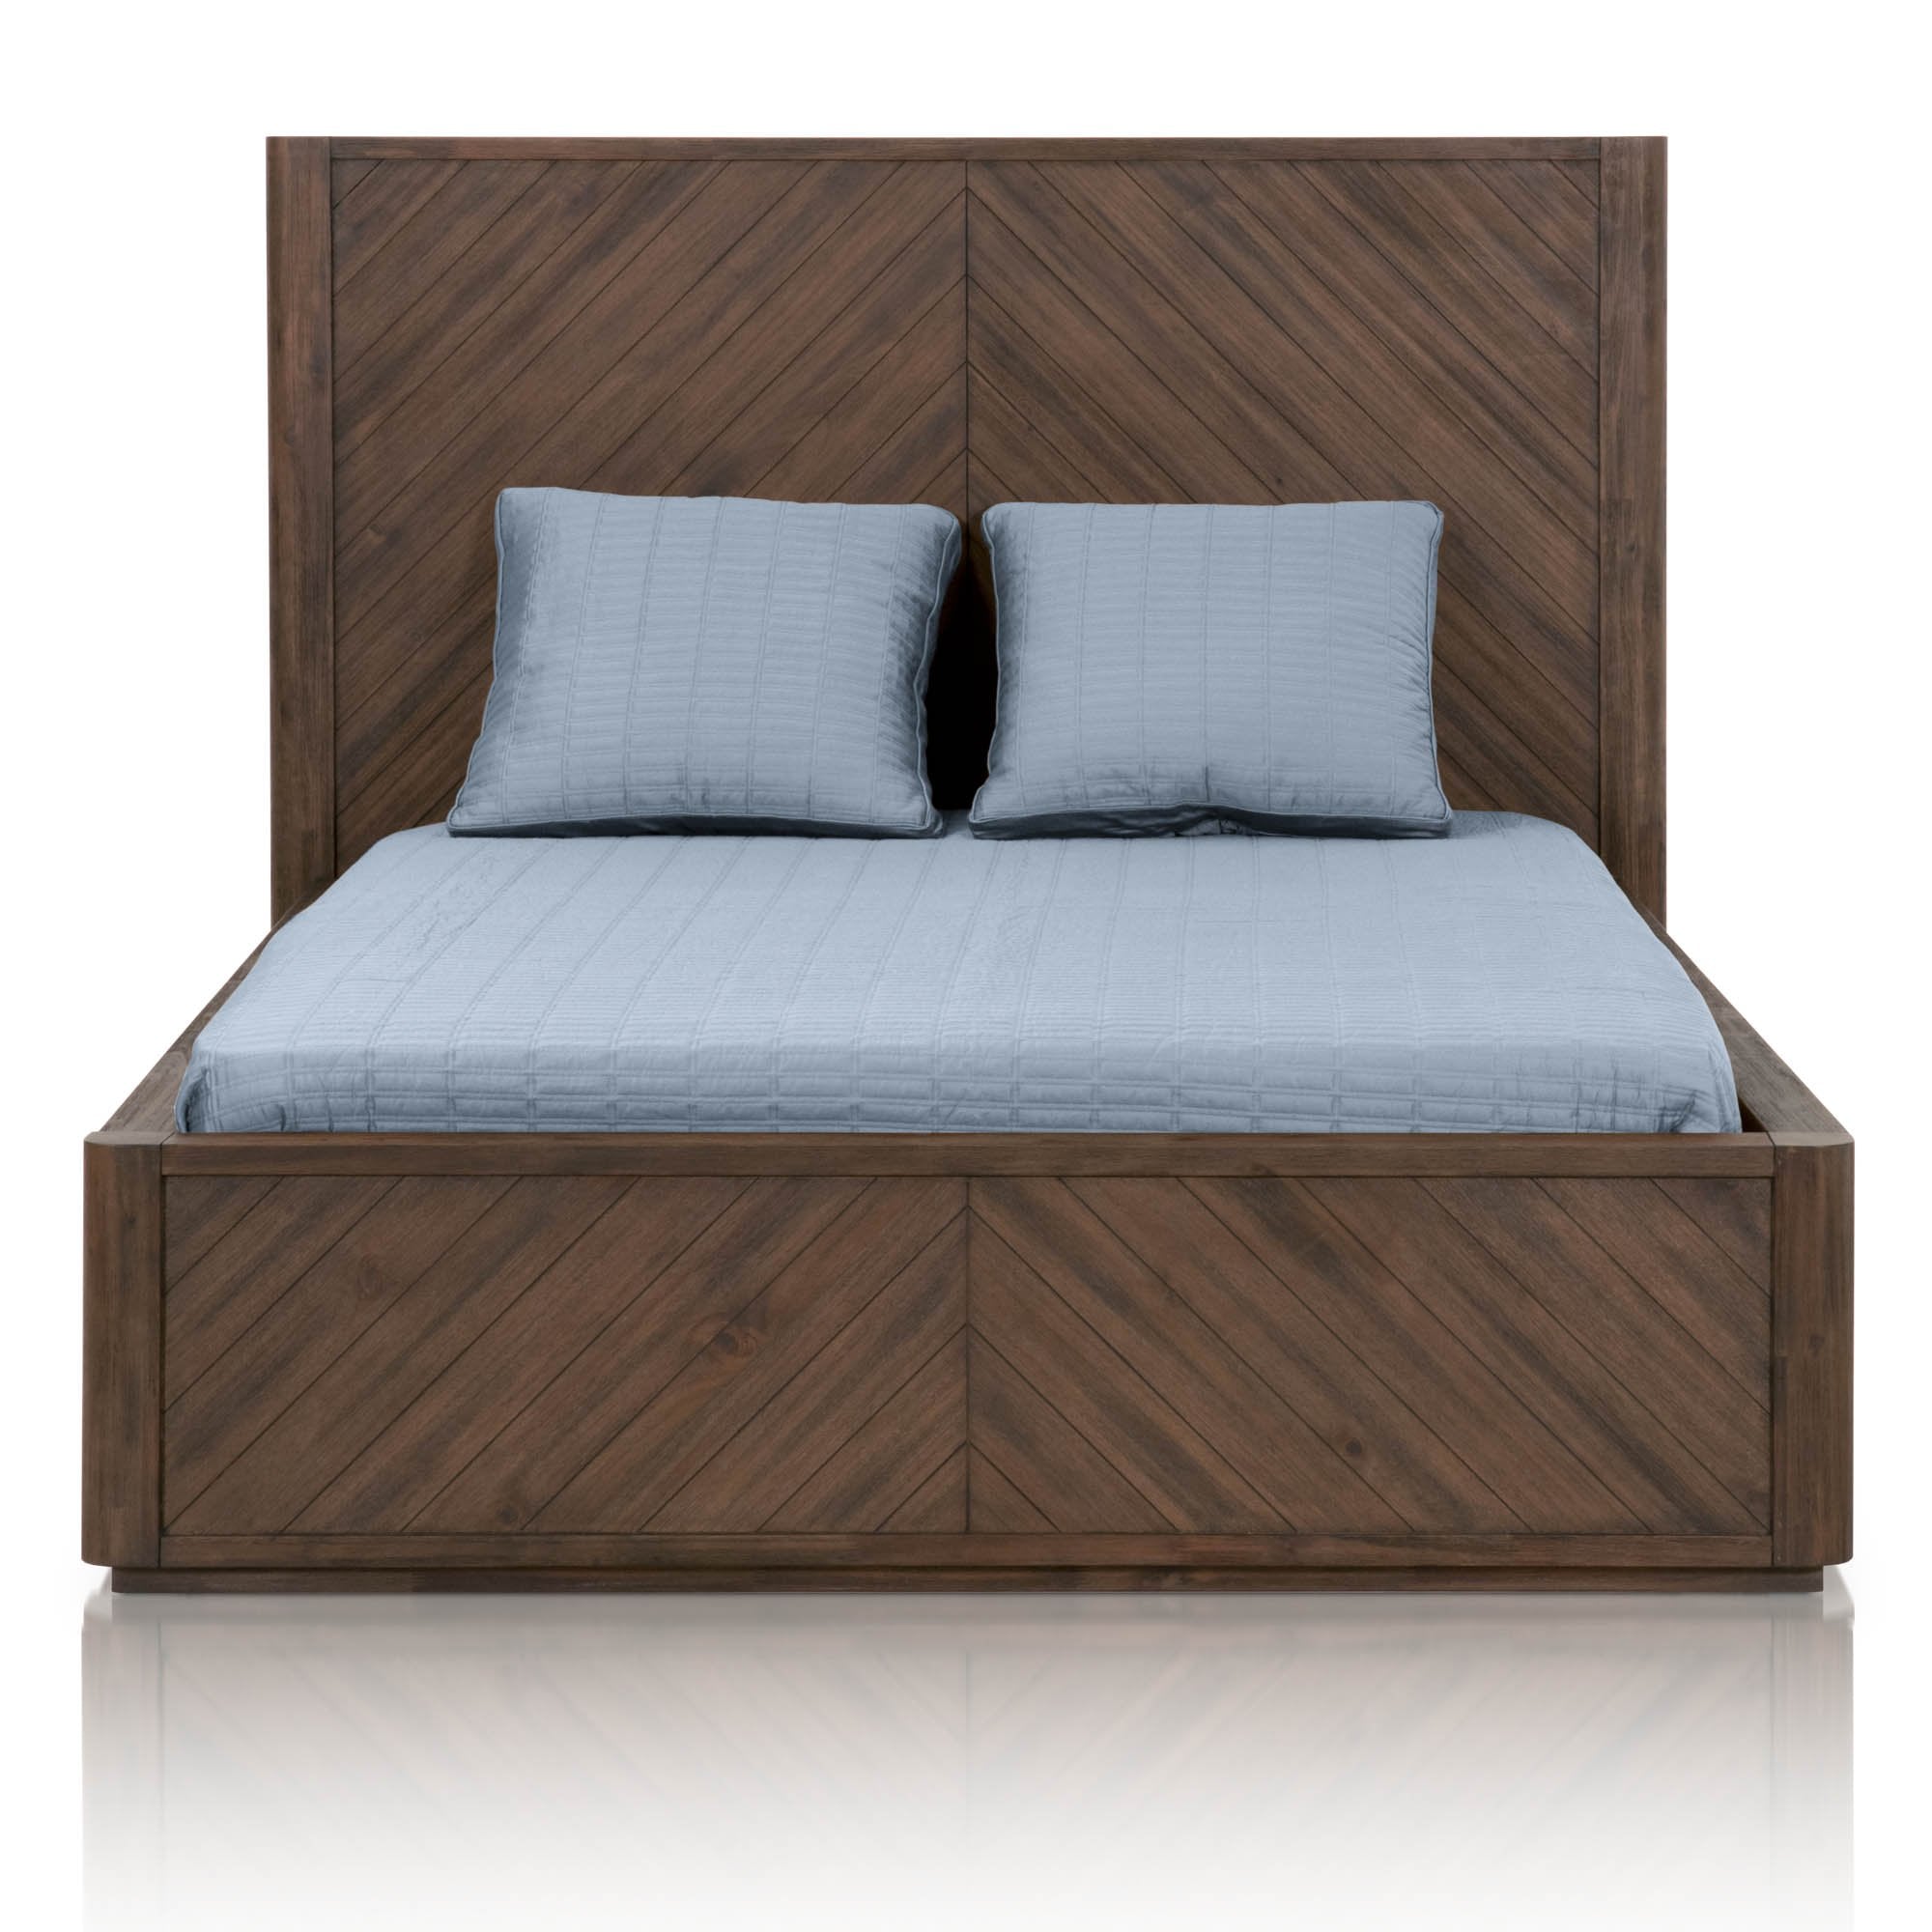 Apex Standard King Bed